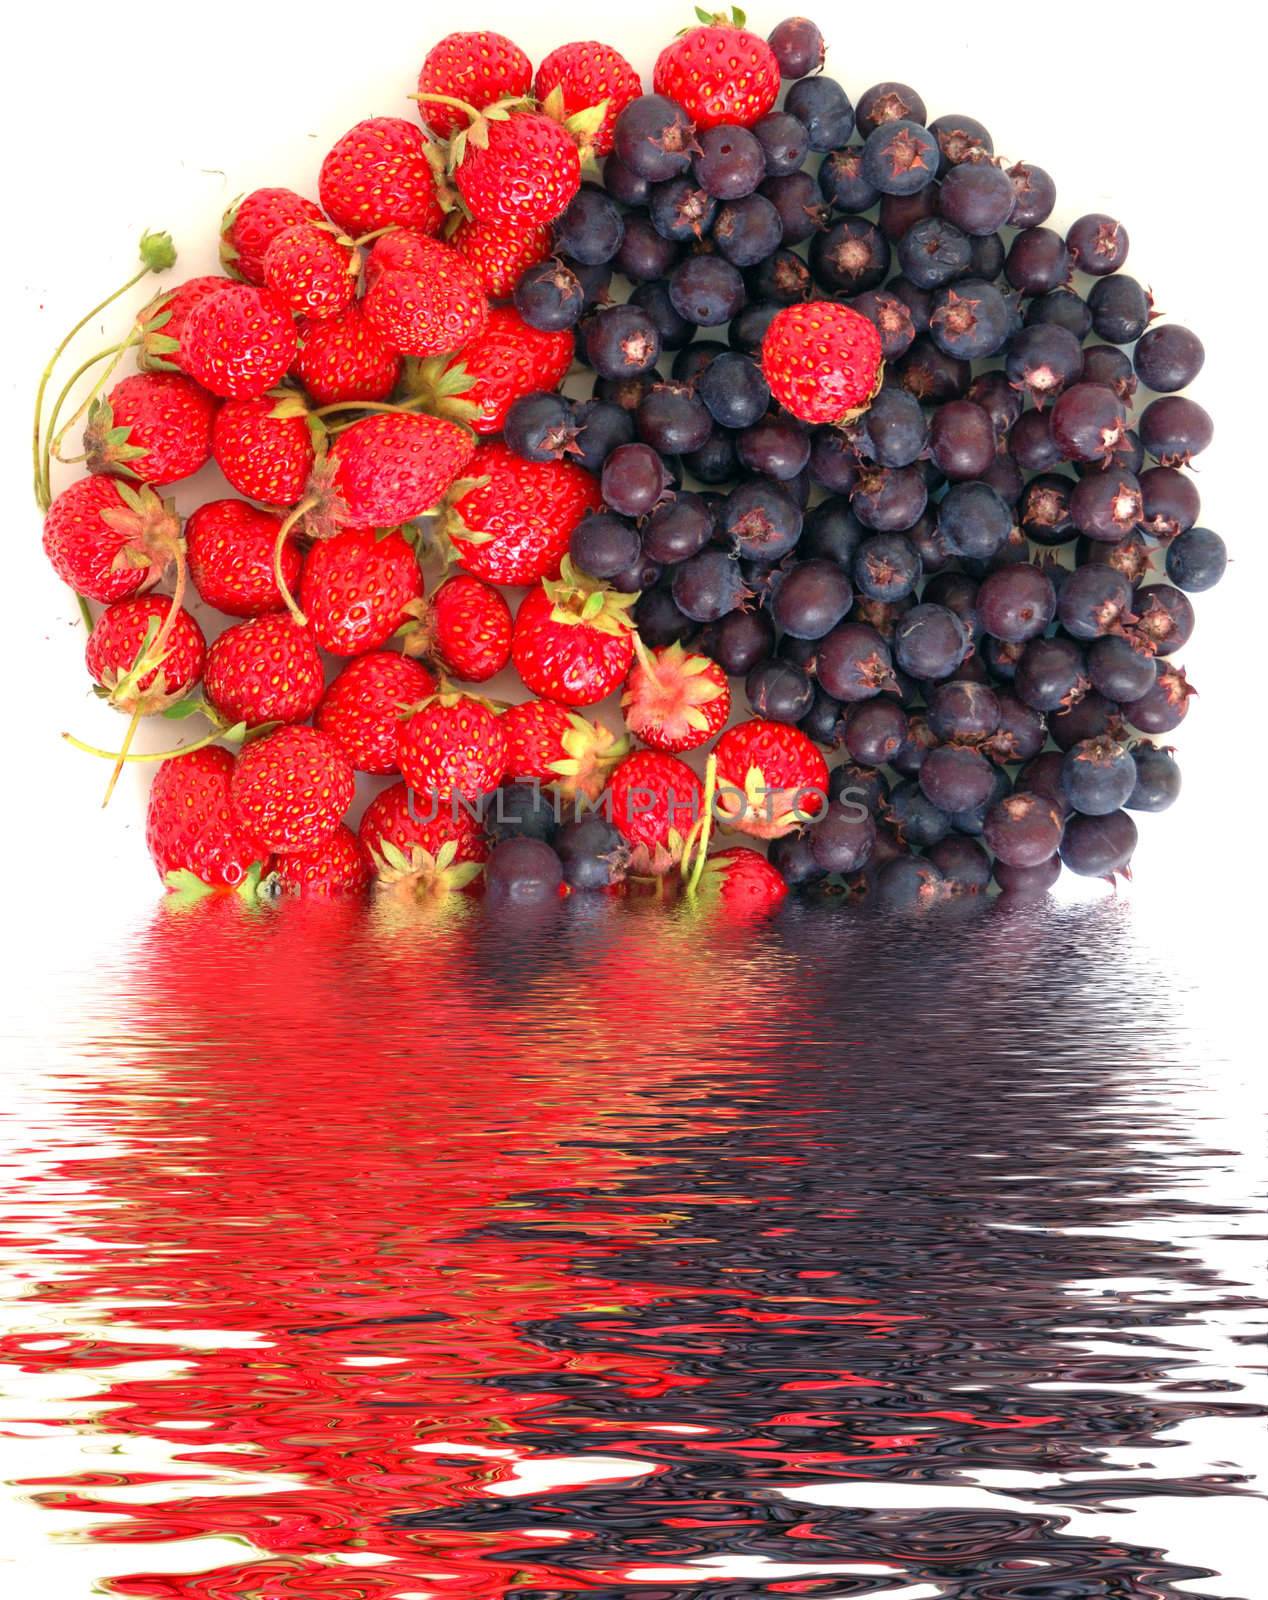 yin yang symbol made of fresh strawberries and bog bilberries